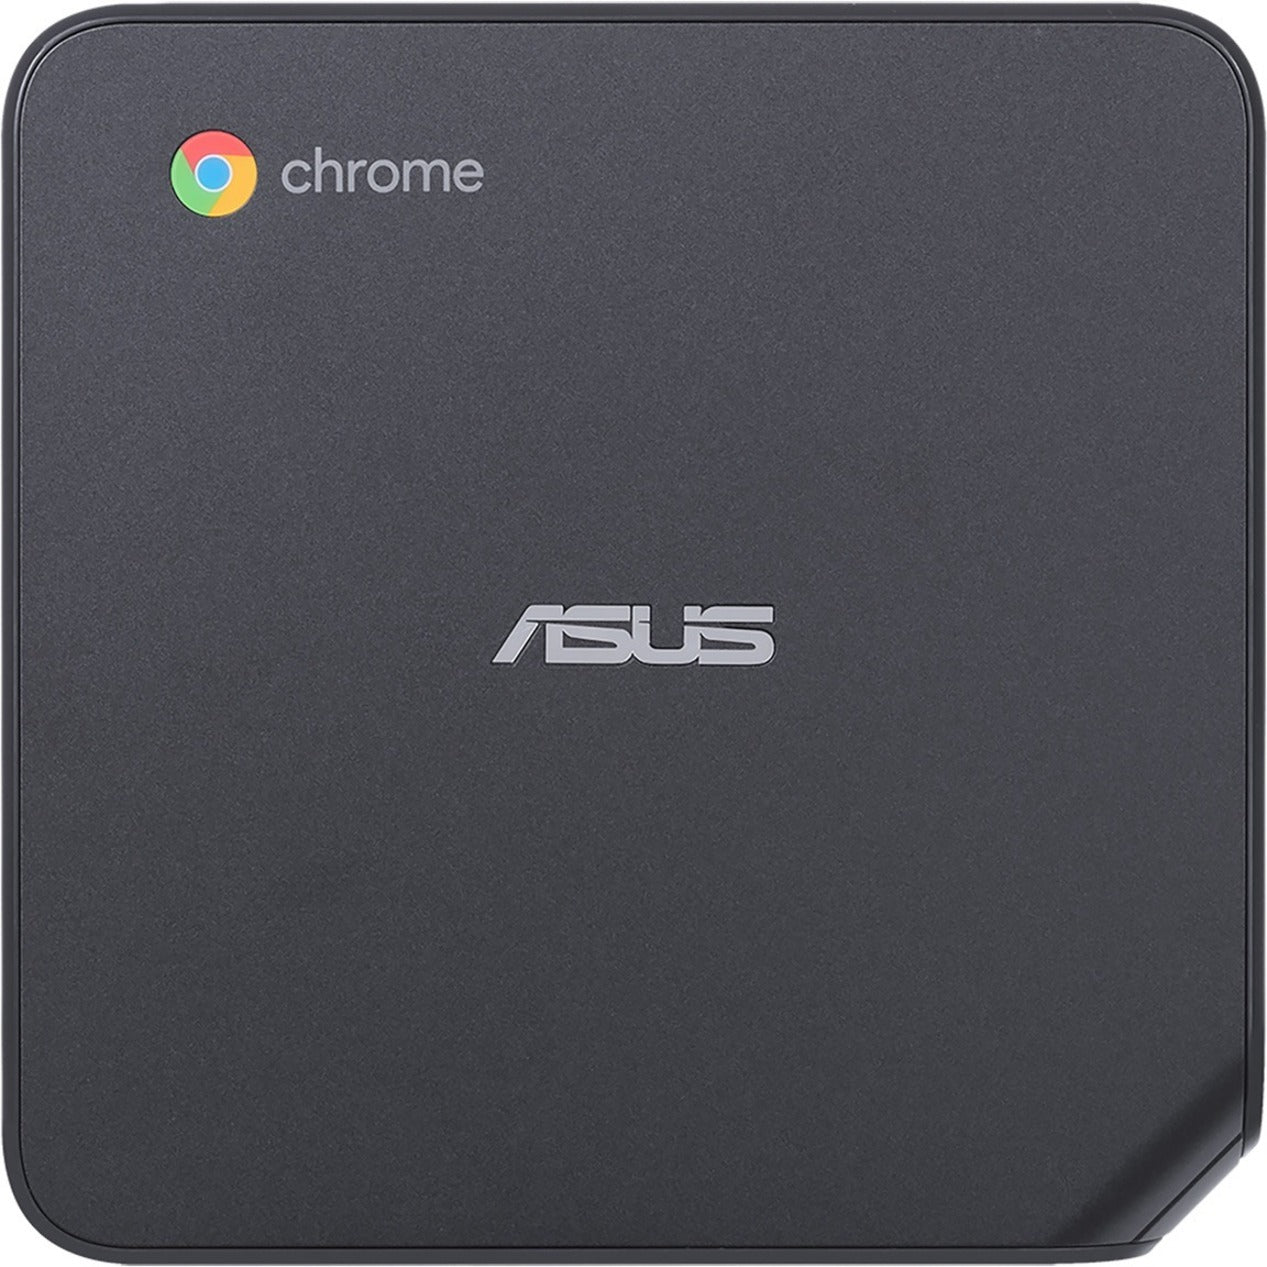 Asus CHROMEBOX4-GC17UN Chromebox, Celeron 5205U, 4GB RAM, 32GB Flash Memory, Chrome OS Retail